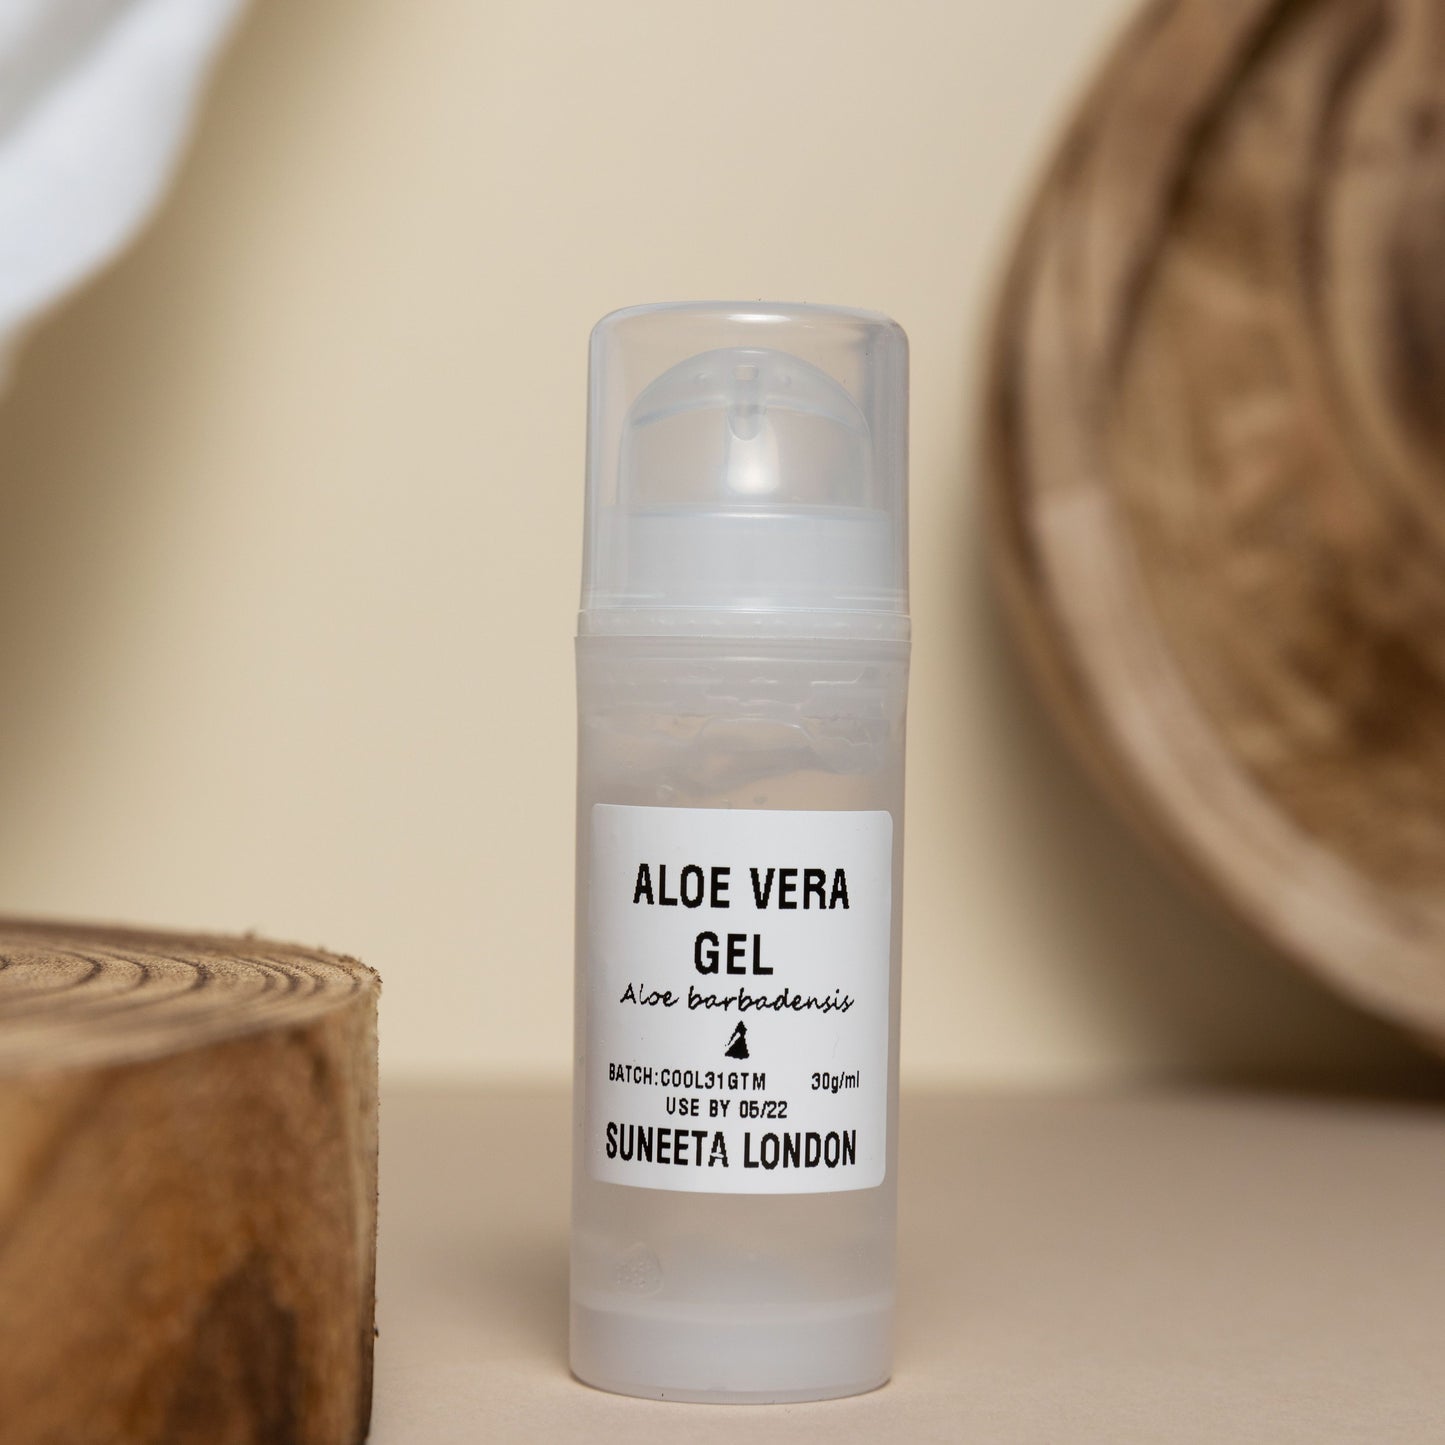 Aloe Vera gel, Aloe Vera, aloe, Aloe Vera gel airless pump, Aloe Vera 30g